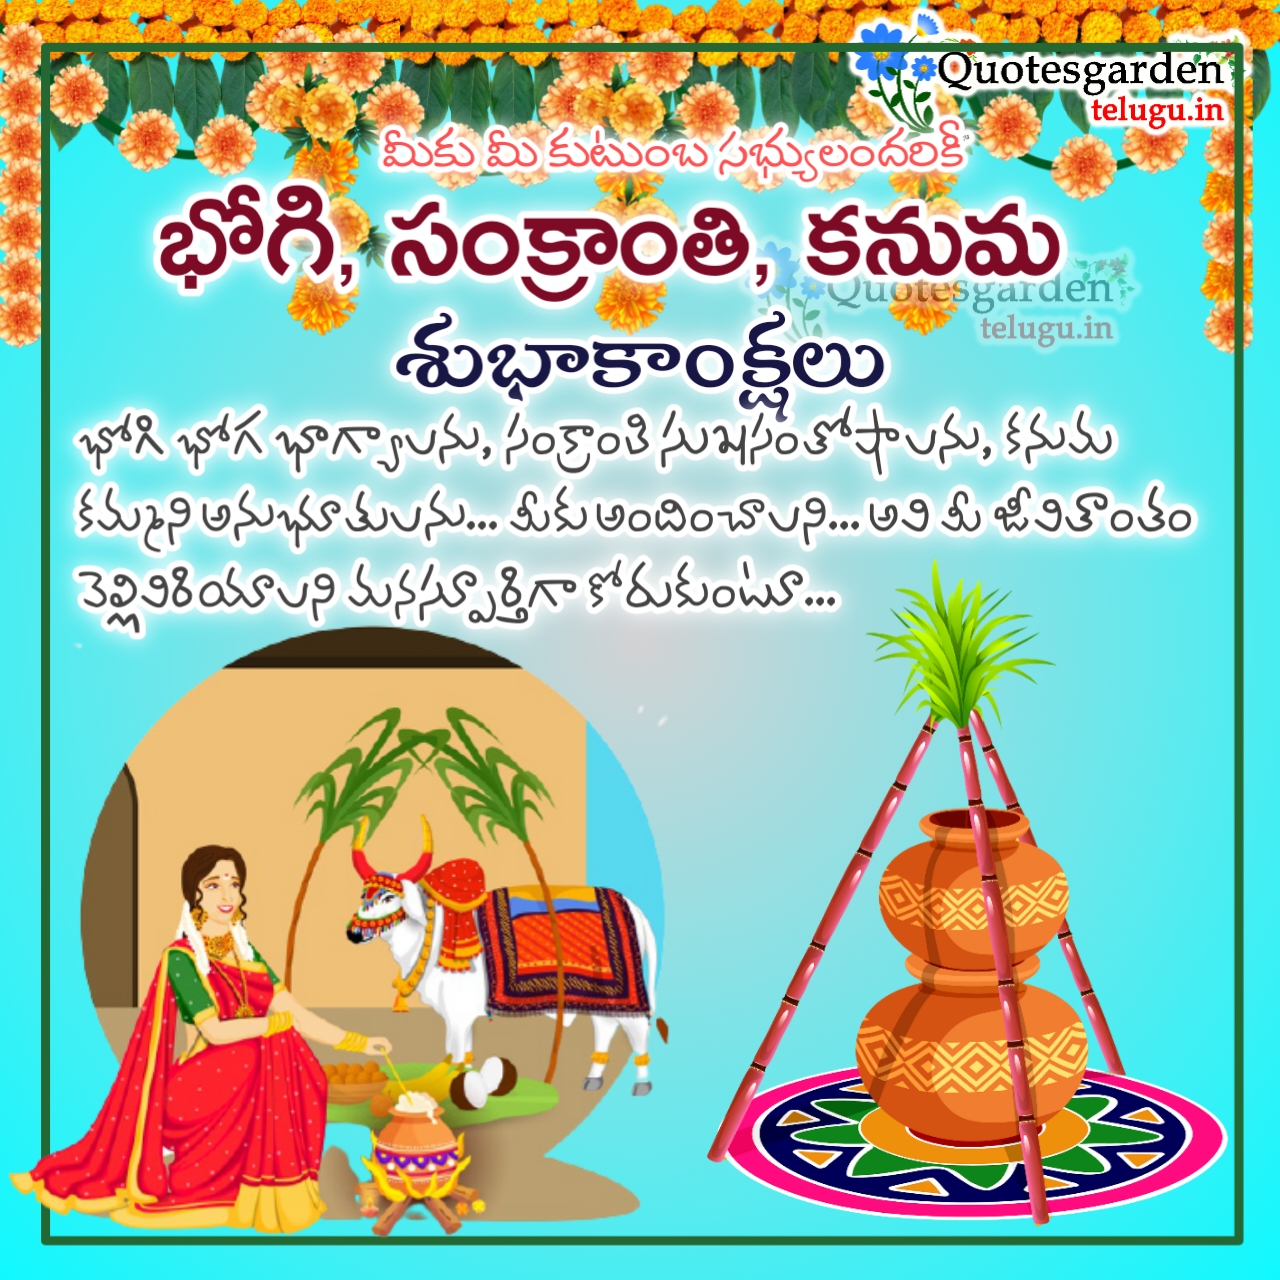 happy Sankranti greetings in Telugu wishes 2021 QUOTES GARDEN TELUGU